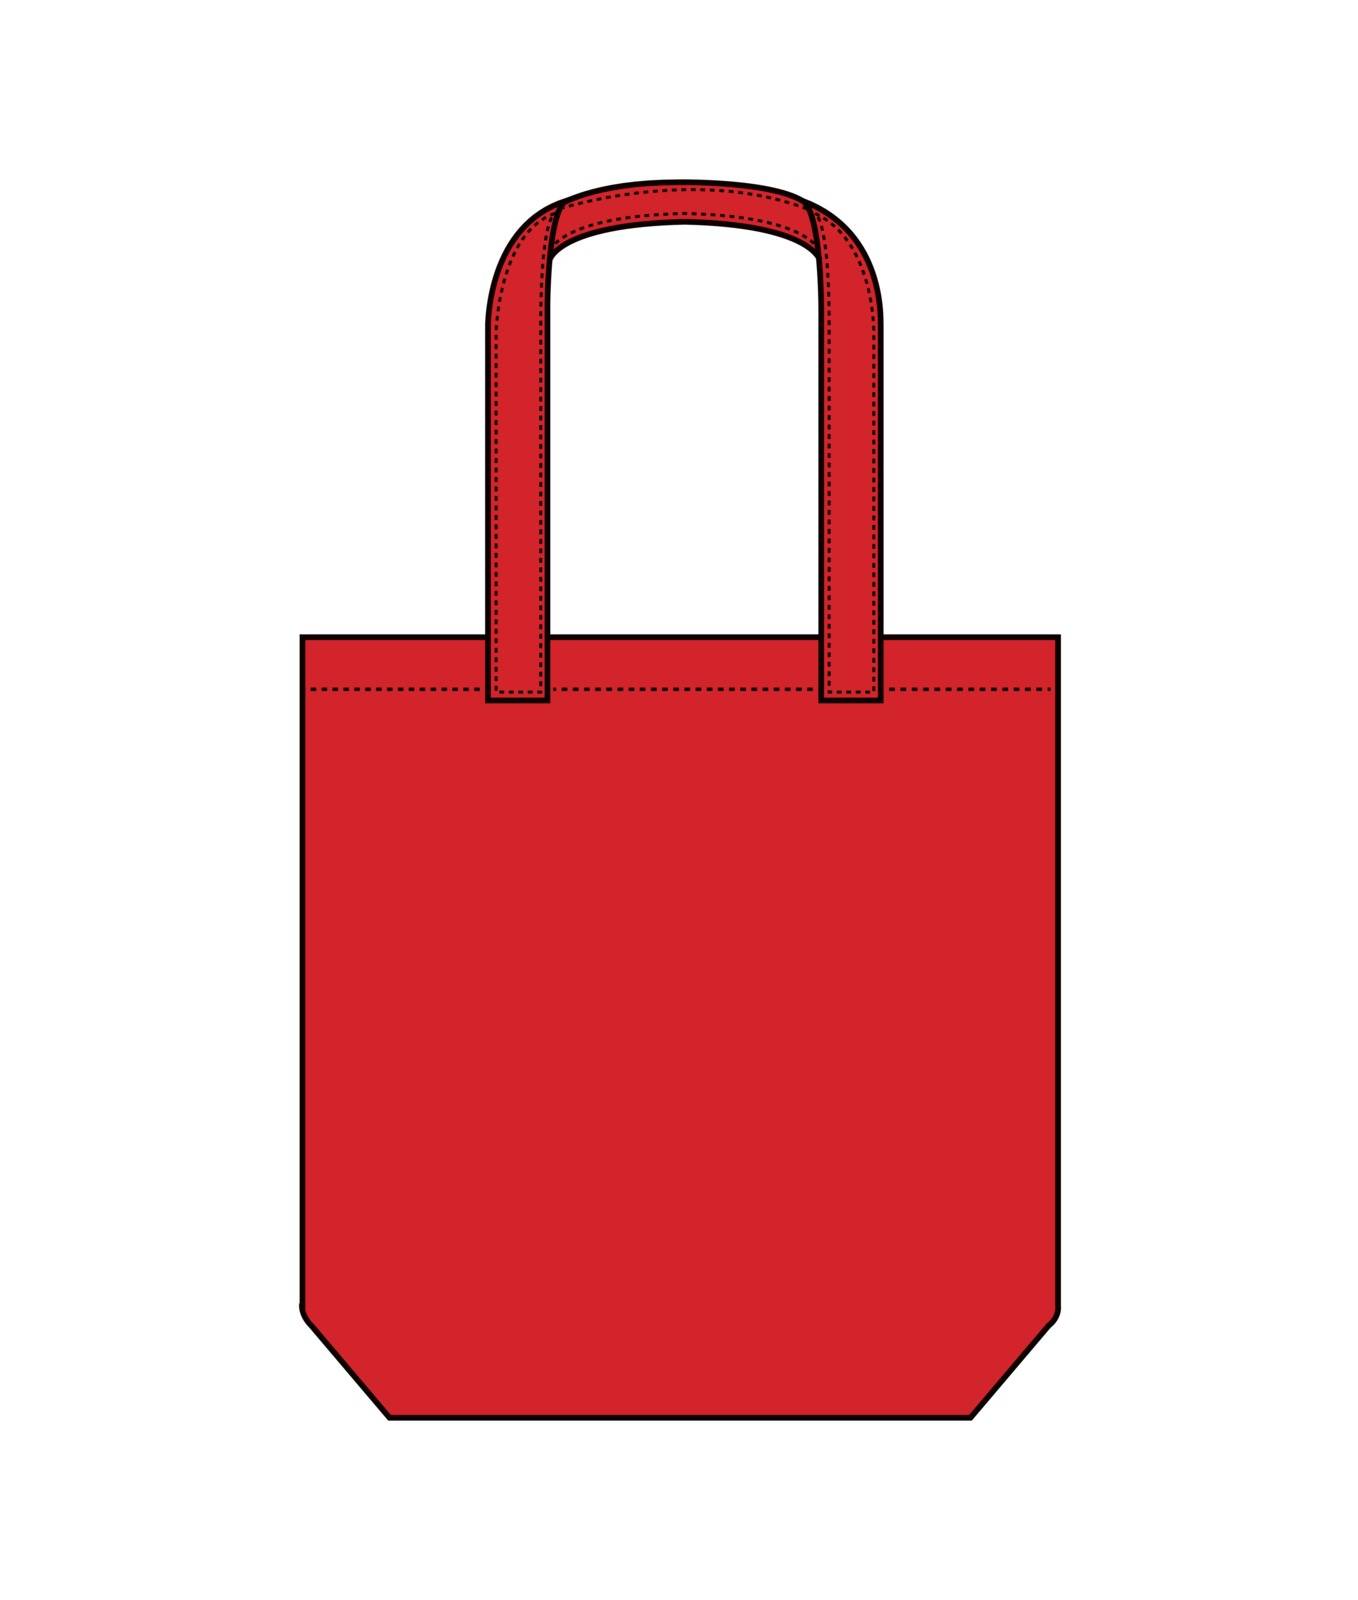 Tote bag / shopping bag / eco bag template illustration by barks